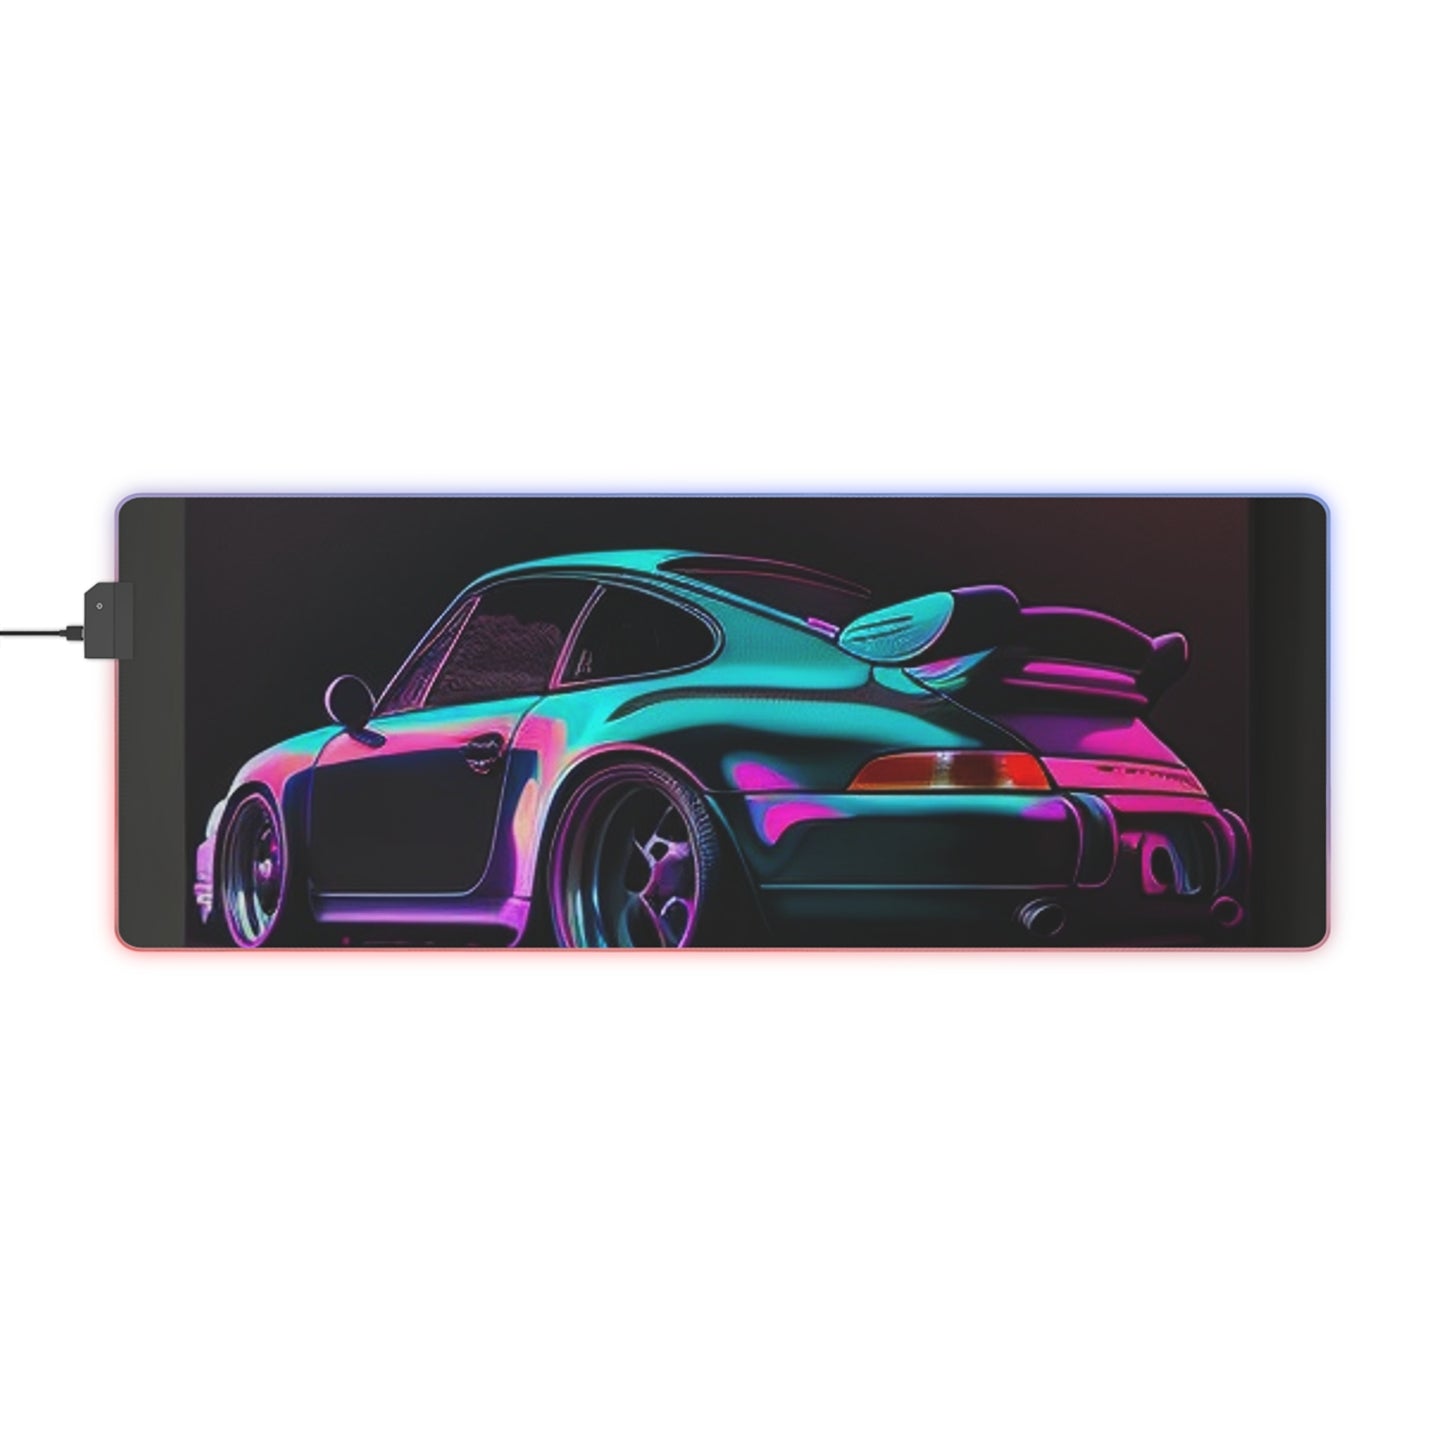 LED Gaming Mouse Pad Porsche Purple 1